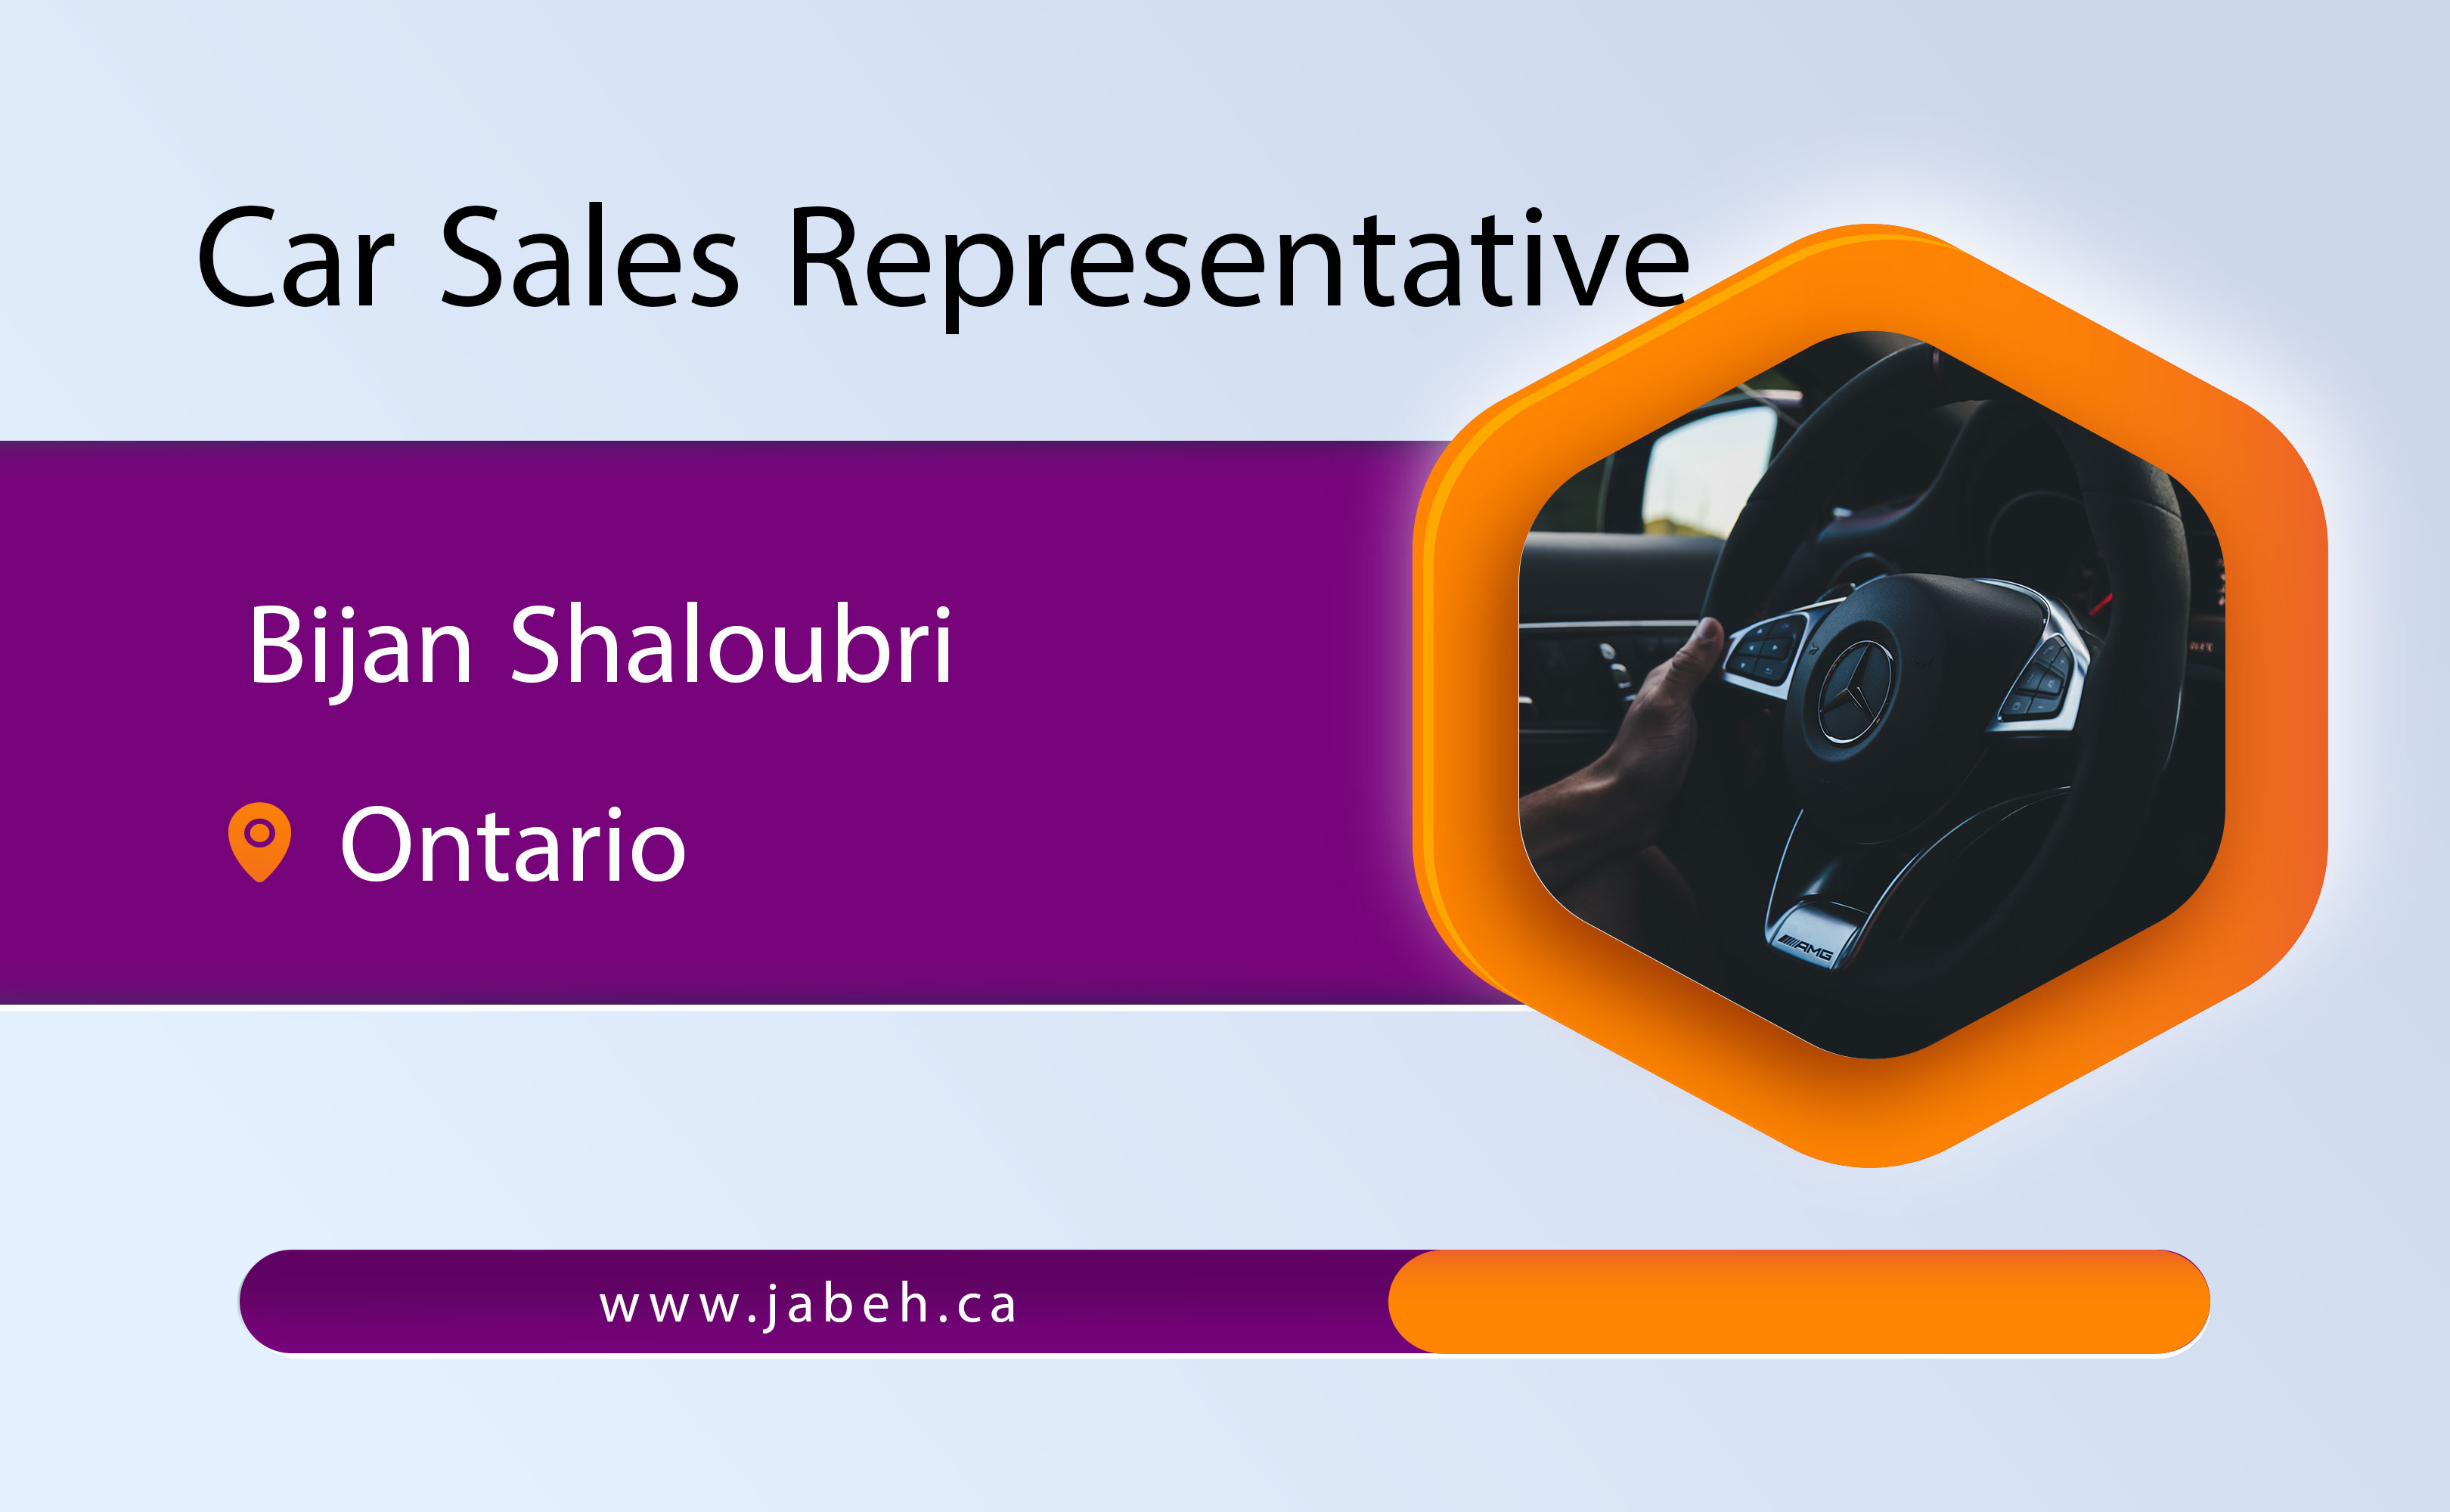 Iranian car sales representative Bijan Shaloubri in Ontario